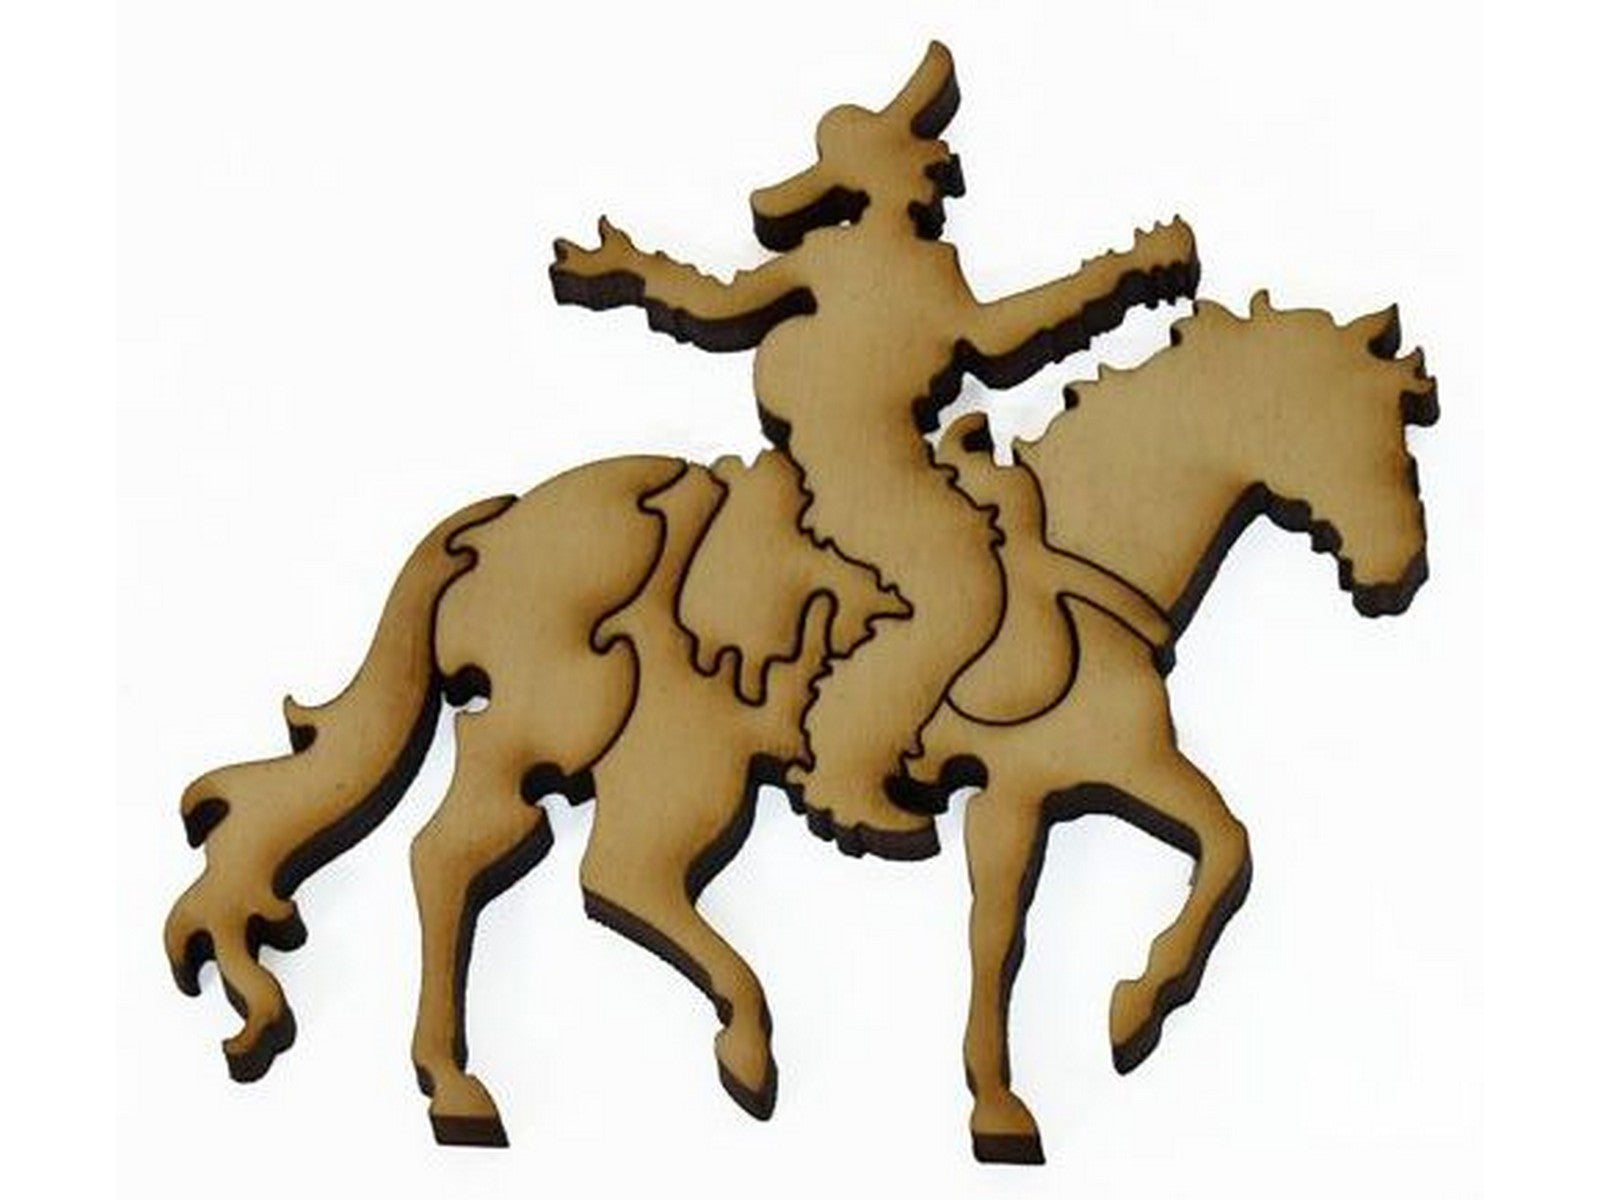 A closeup of pieces showing a cowboy with a guitar riding a horse.